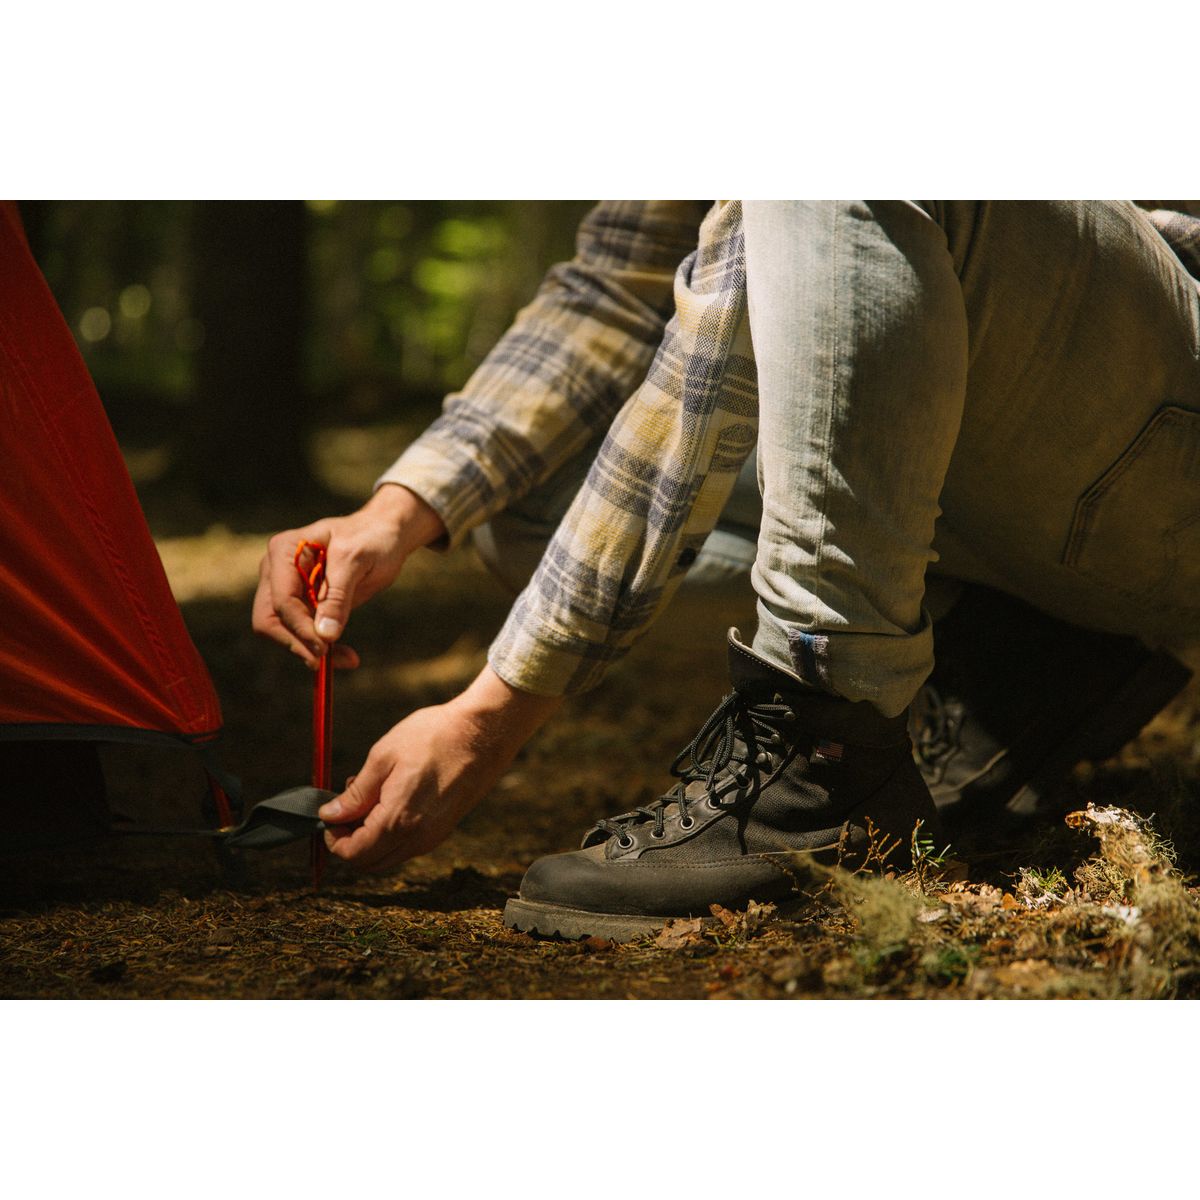 Danner Light II GTX Hiking Boot - Men's | eBay